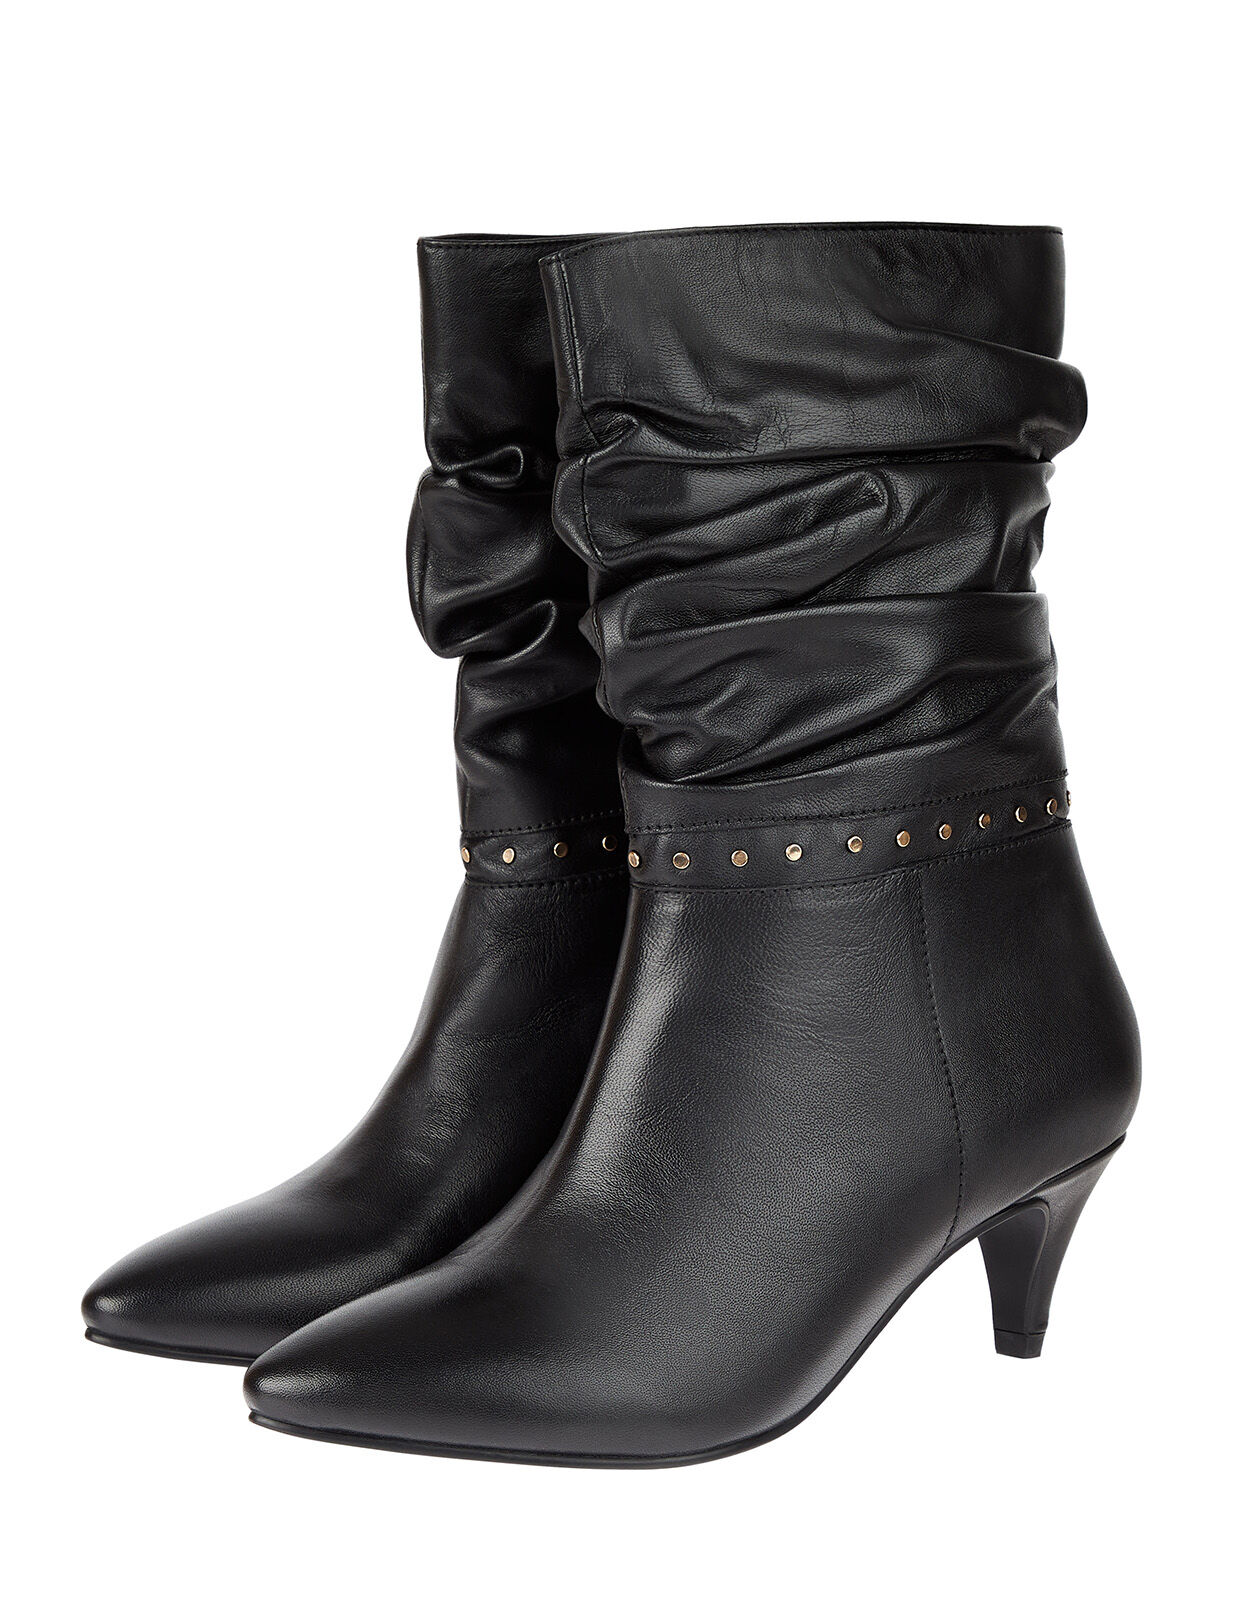 studded black ankle boots uk